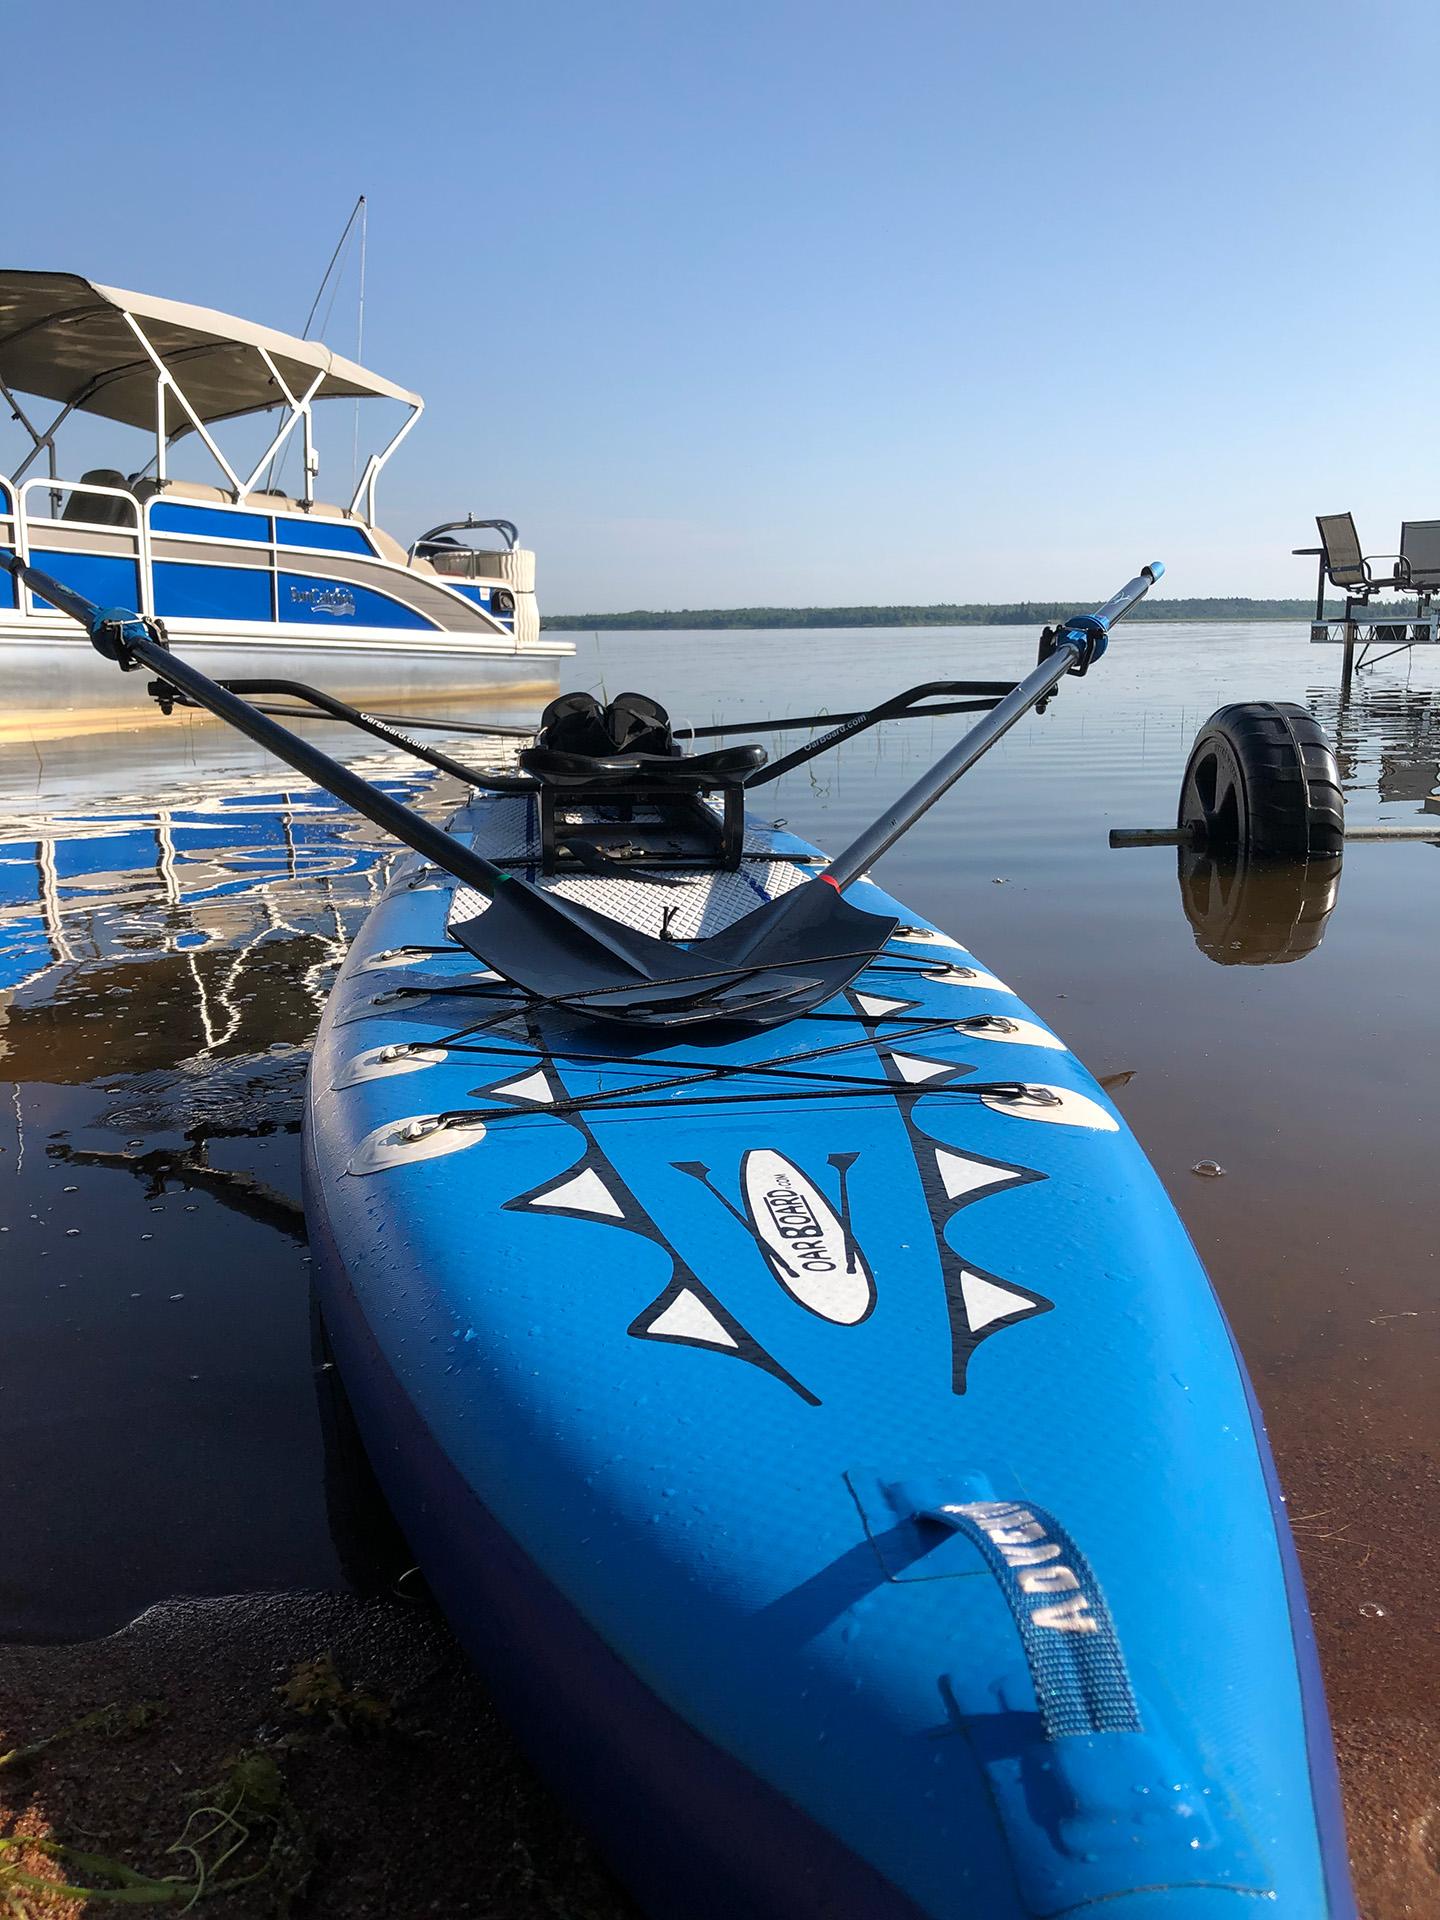 Innovative Inflatable Portable Oar & Paddle Board Hybrid Provides Cross-Training